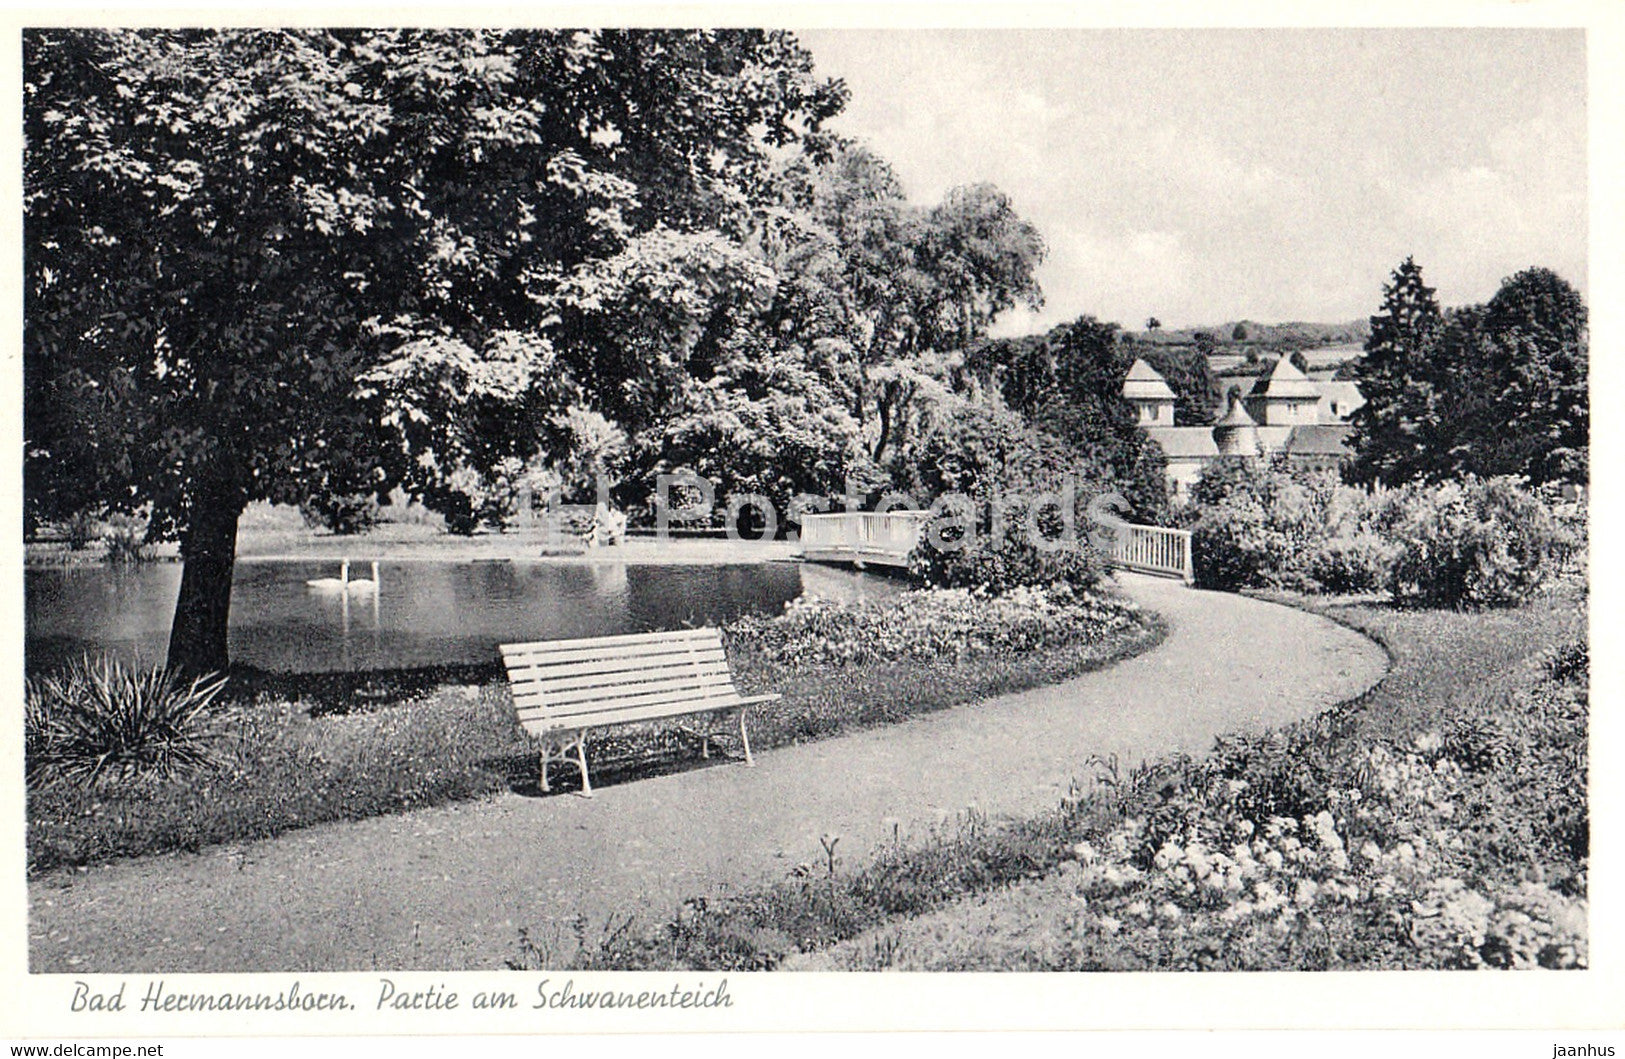 Bad Hermannsborn - Partie am Schwanenteich - old postcard - 1957 - Germany - unused - JH Postcards